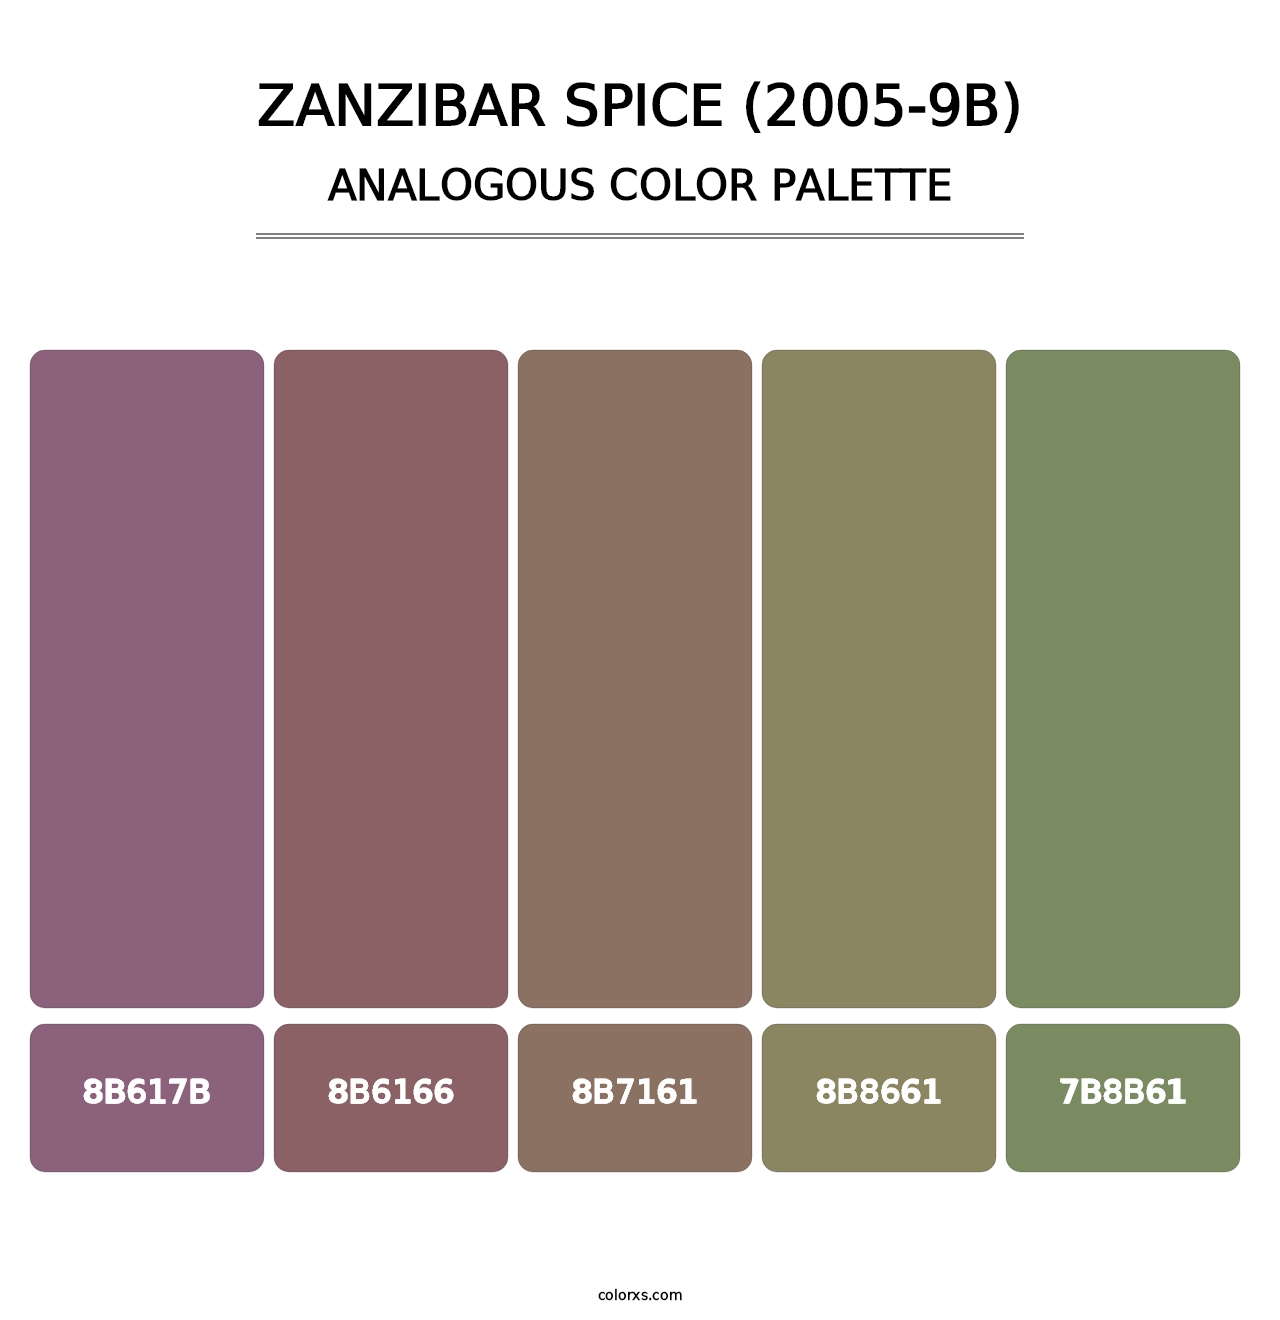 Zanzibar Spice (2005-9B) - Analogous Color Palette